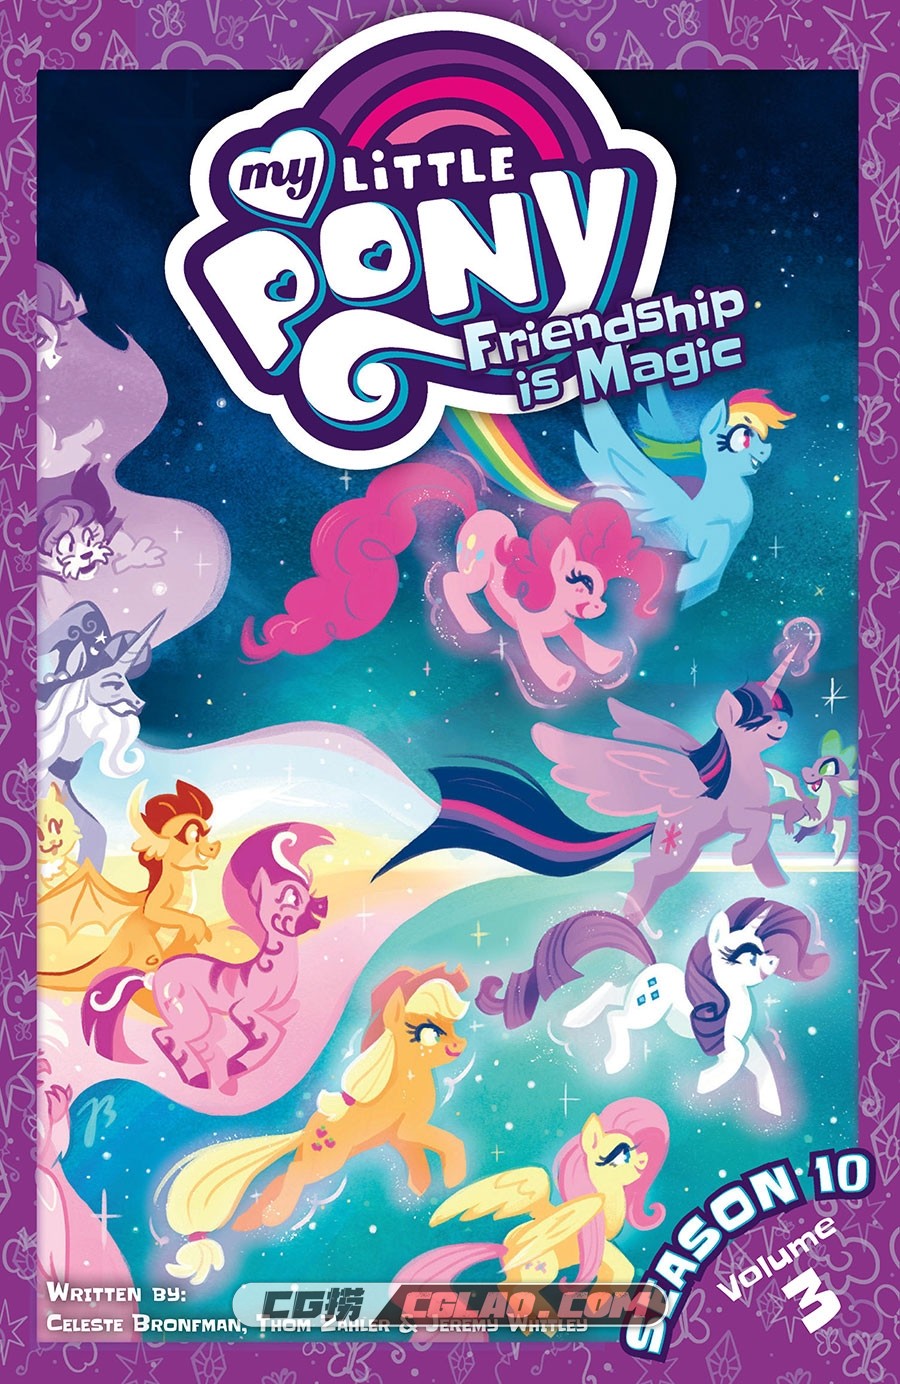 My Little Pony: Friendship Is Magic April 2022 漫画 百度网盘下载,2022-04-01-My-Little-Pony-Friendship-Is-Magic_00.jpg